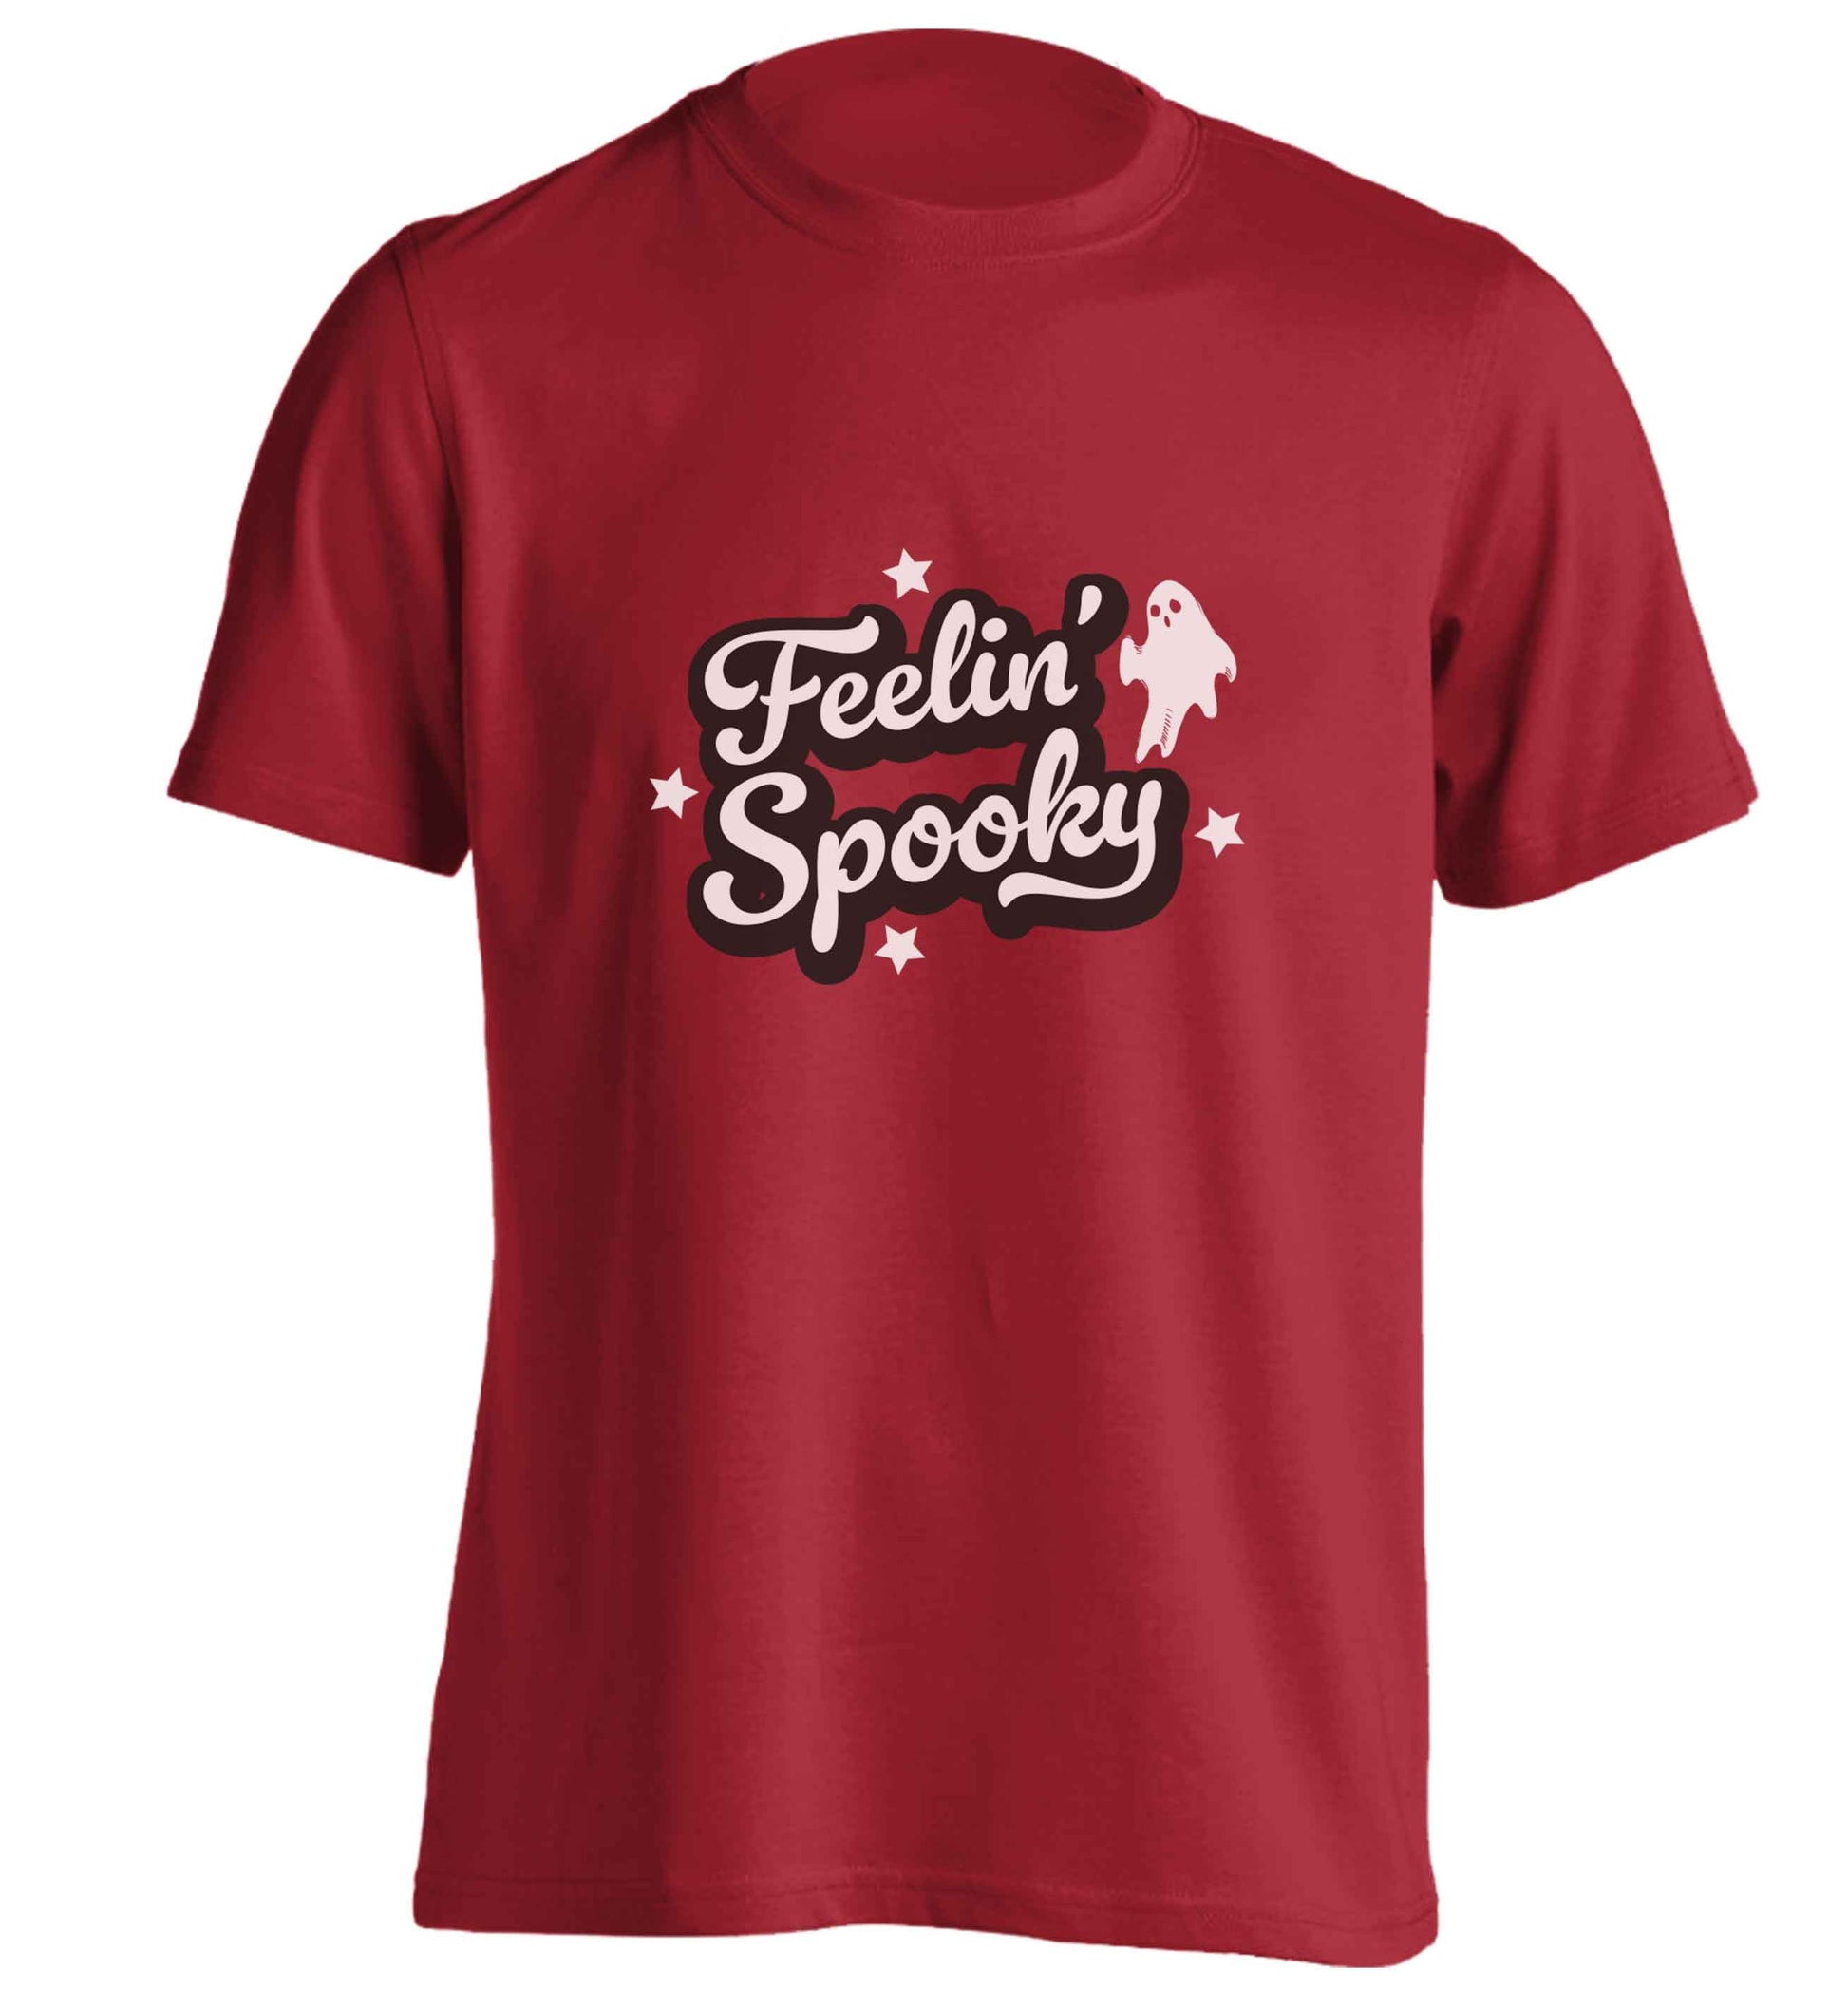 Feelin' Spooky Kit adults unisex red Tshirt 2XL